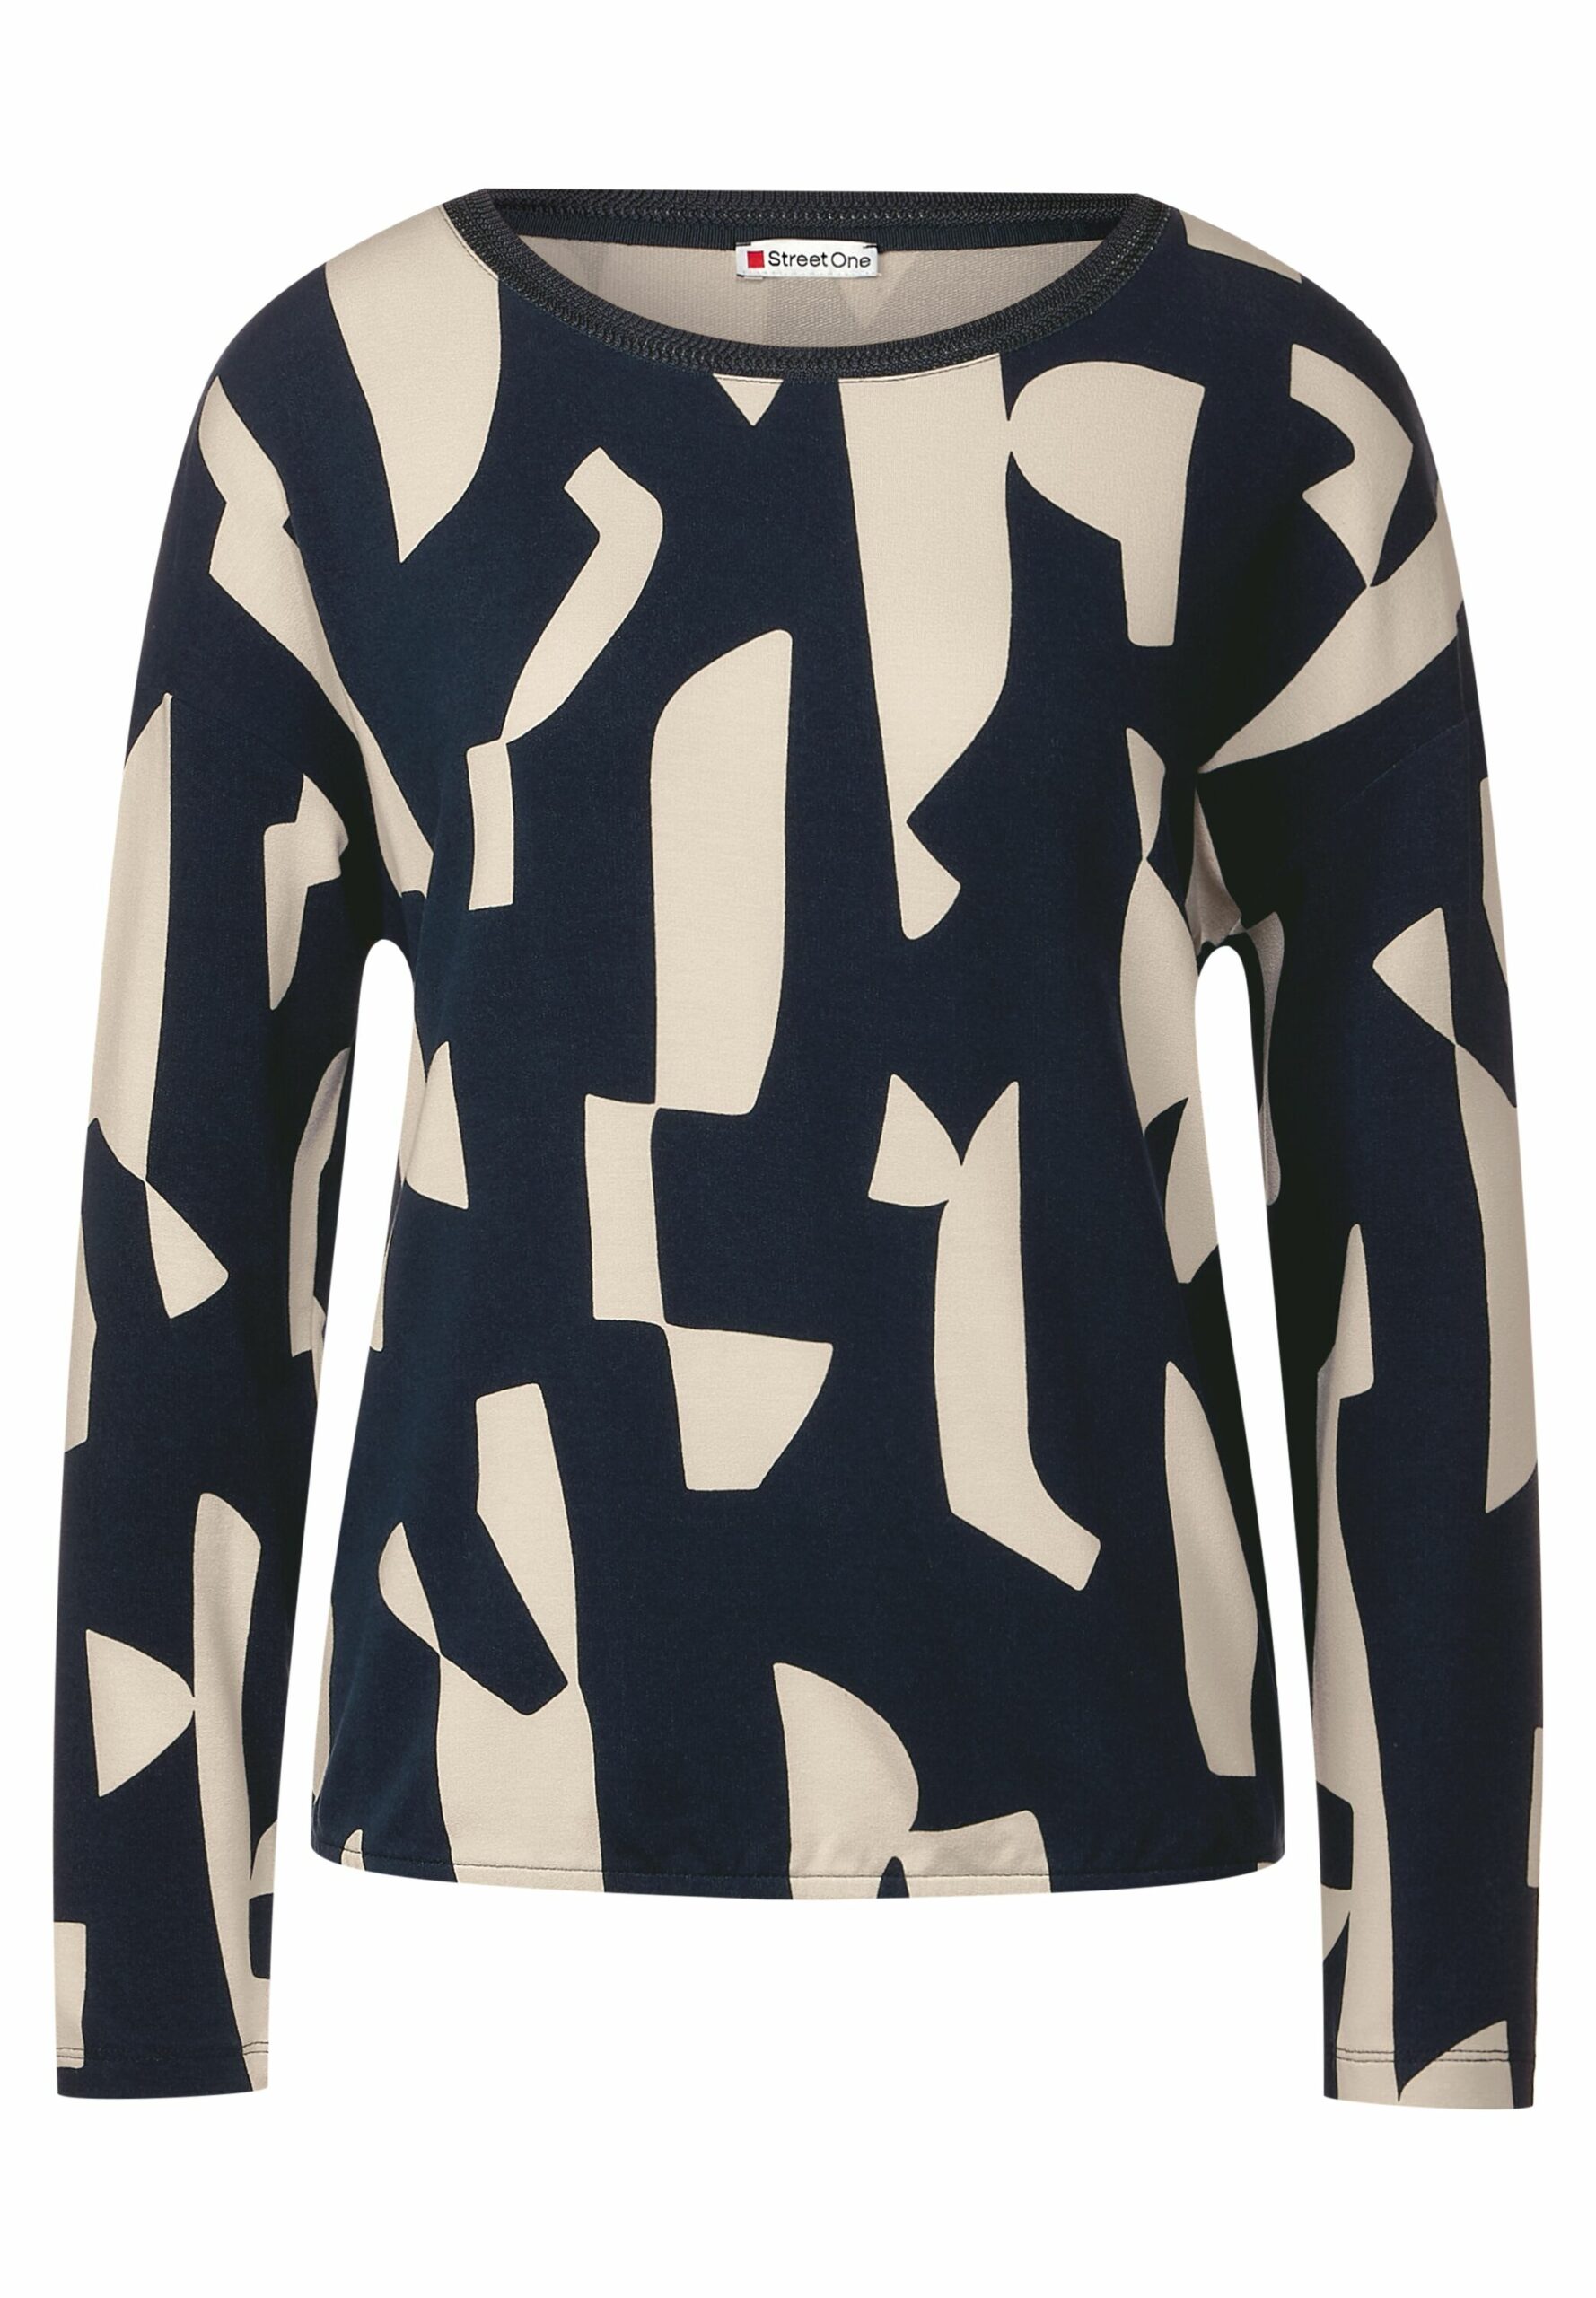 Street One Langarmshirt mit Print - Fashion Point Onlineshop